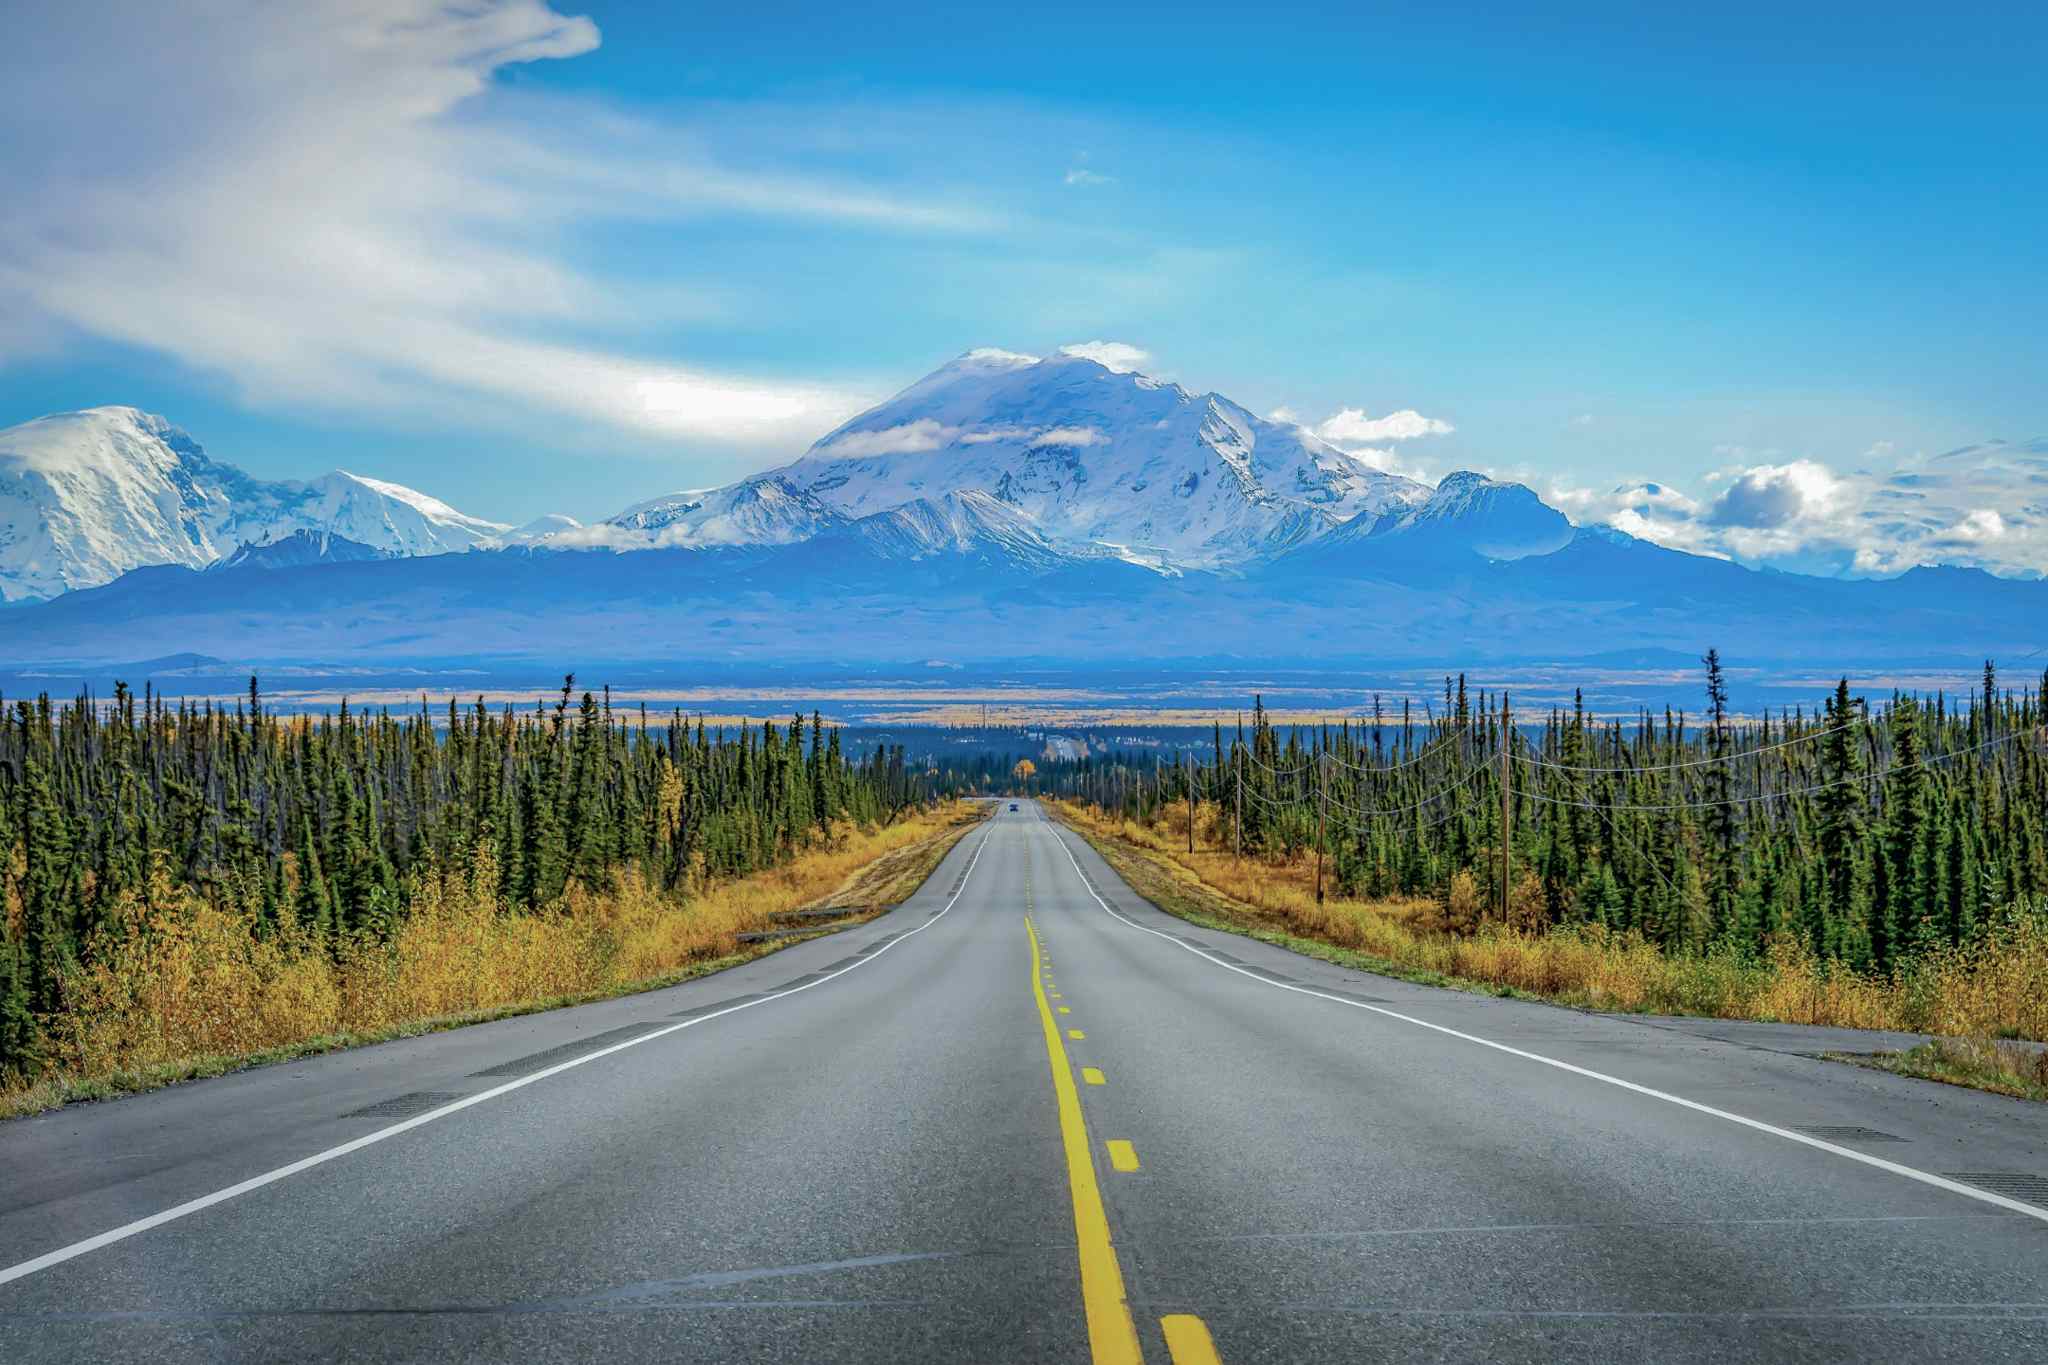 Highway in Alaska, USA. Pcoto: Canva: https://www.canva.com/photos/MADaudhus0k-alaska-road-trip-with-mountain-and-blue-sky/